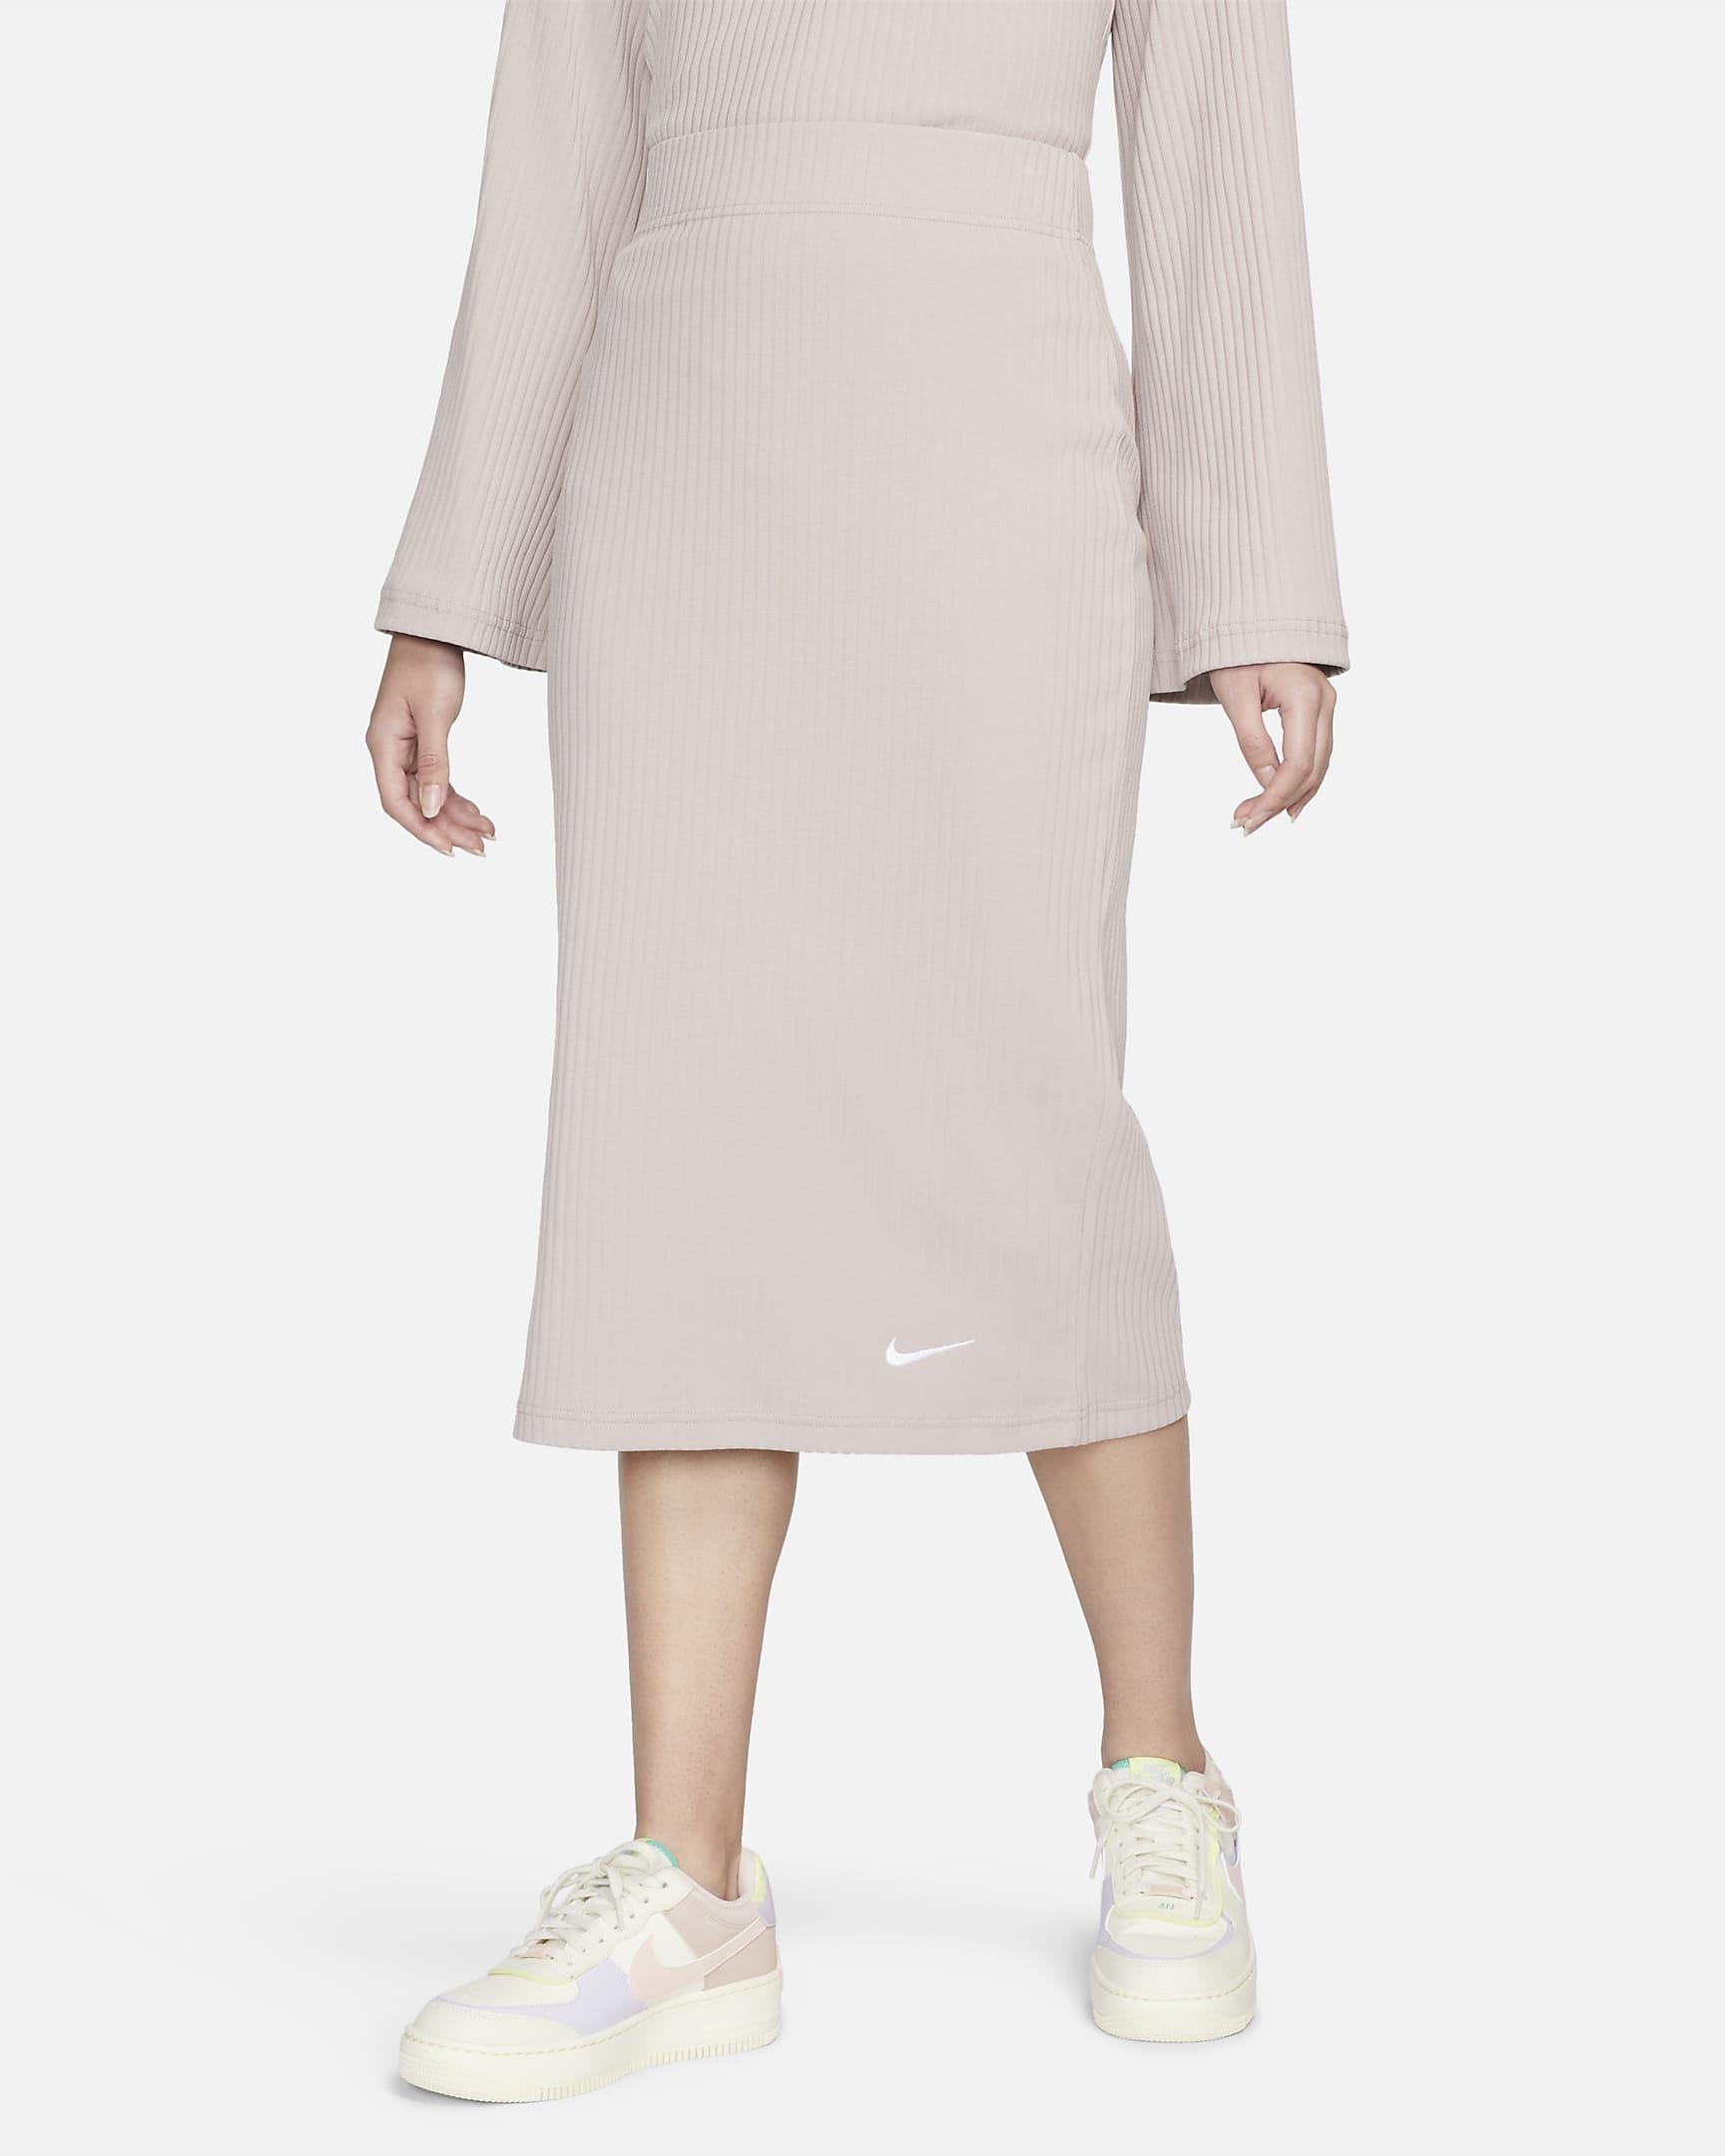 Nike Sportswear Women's High-Waisted Ribbed Jersey Skirt. Nike BG